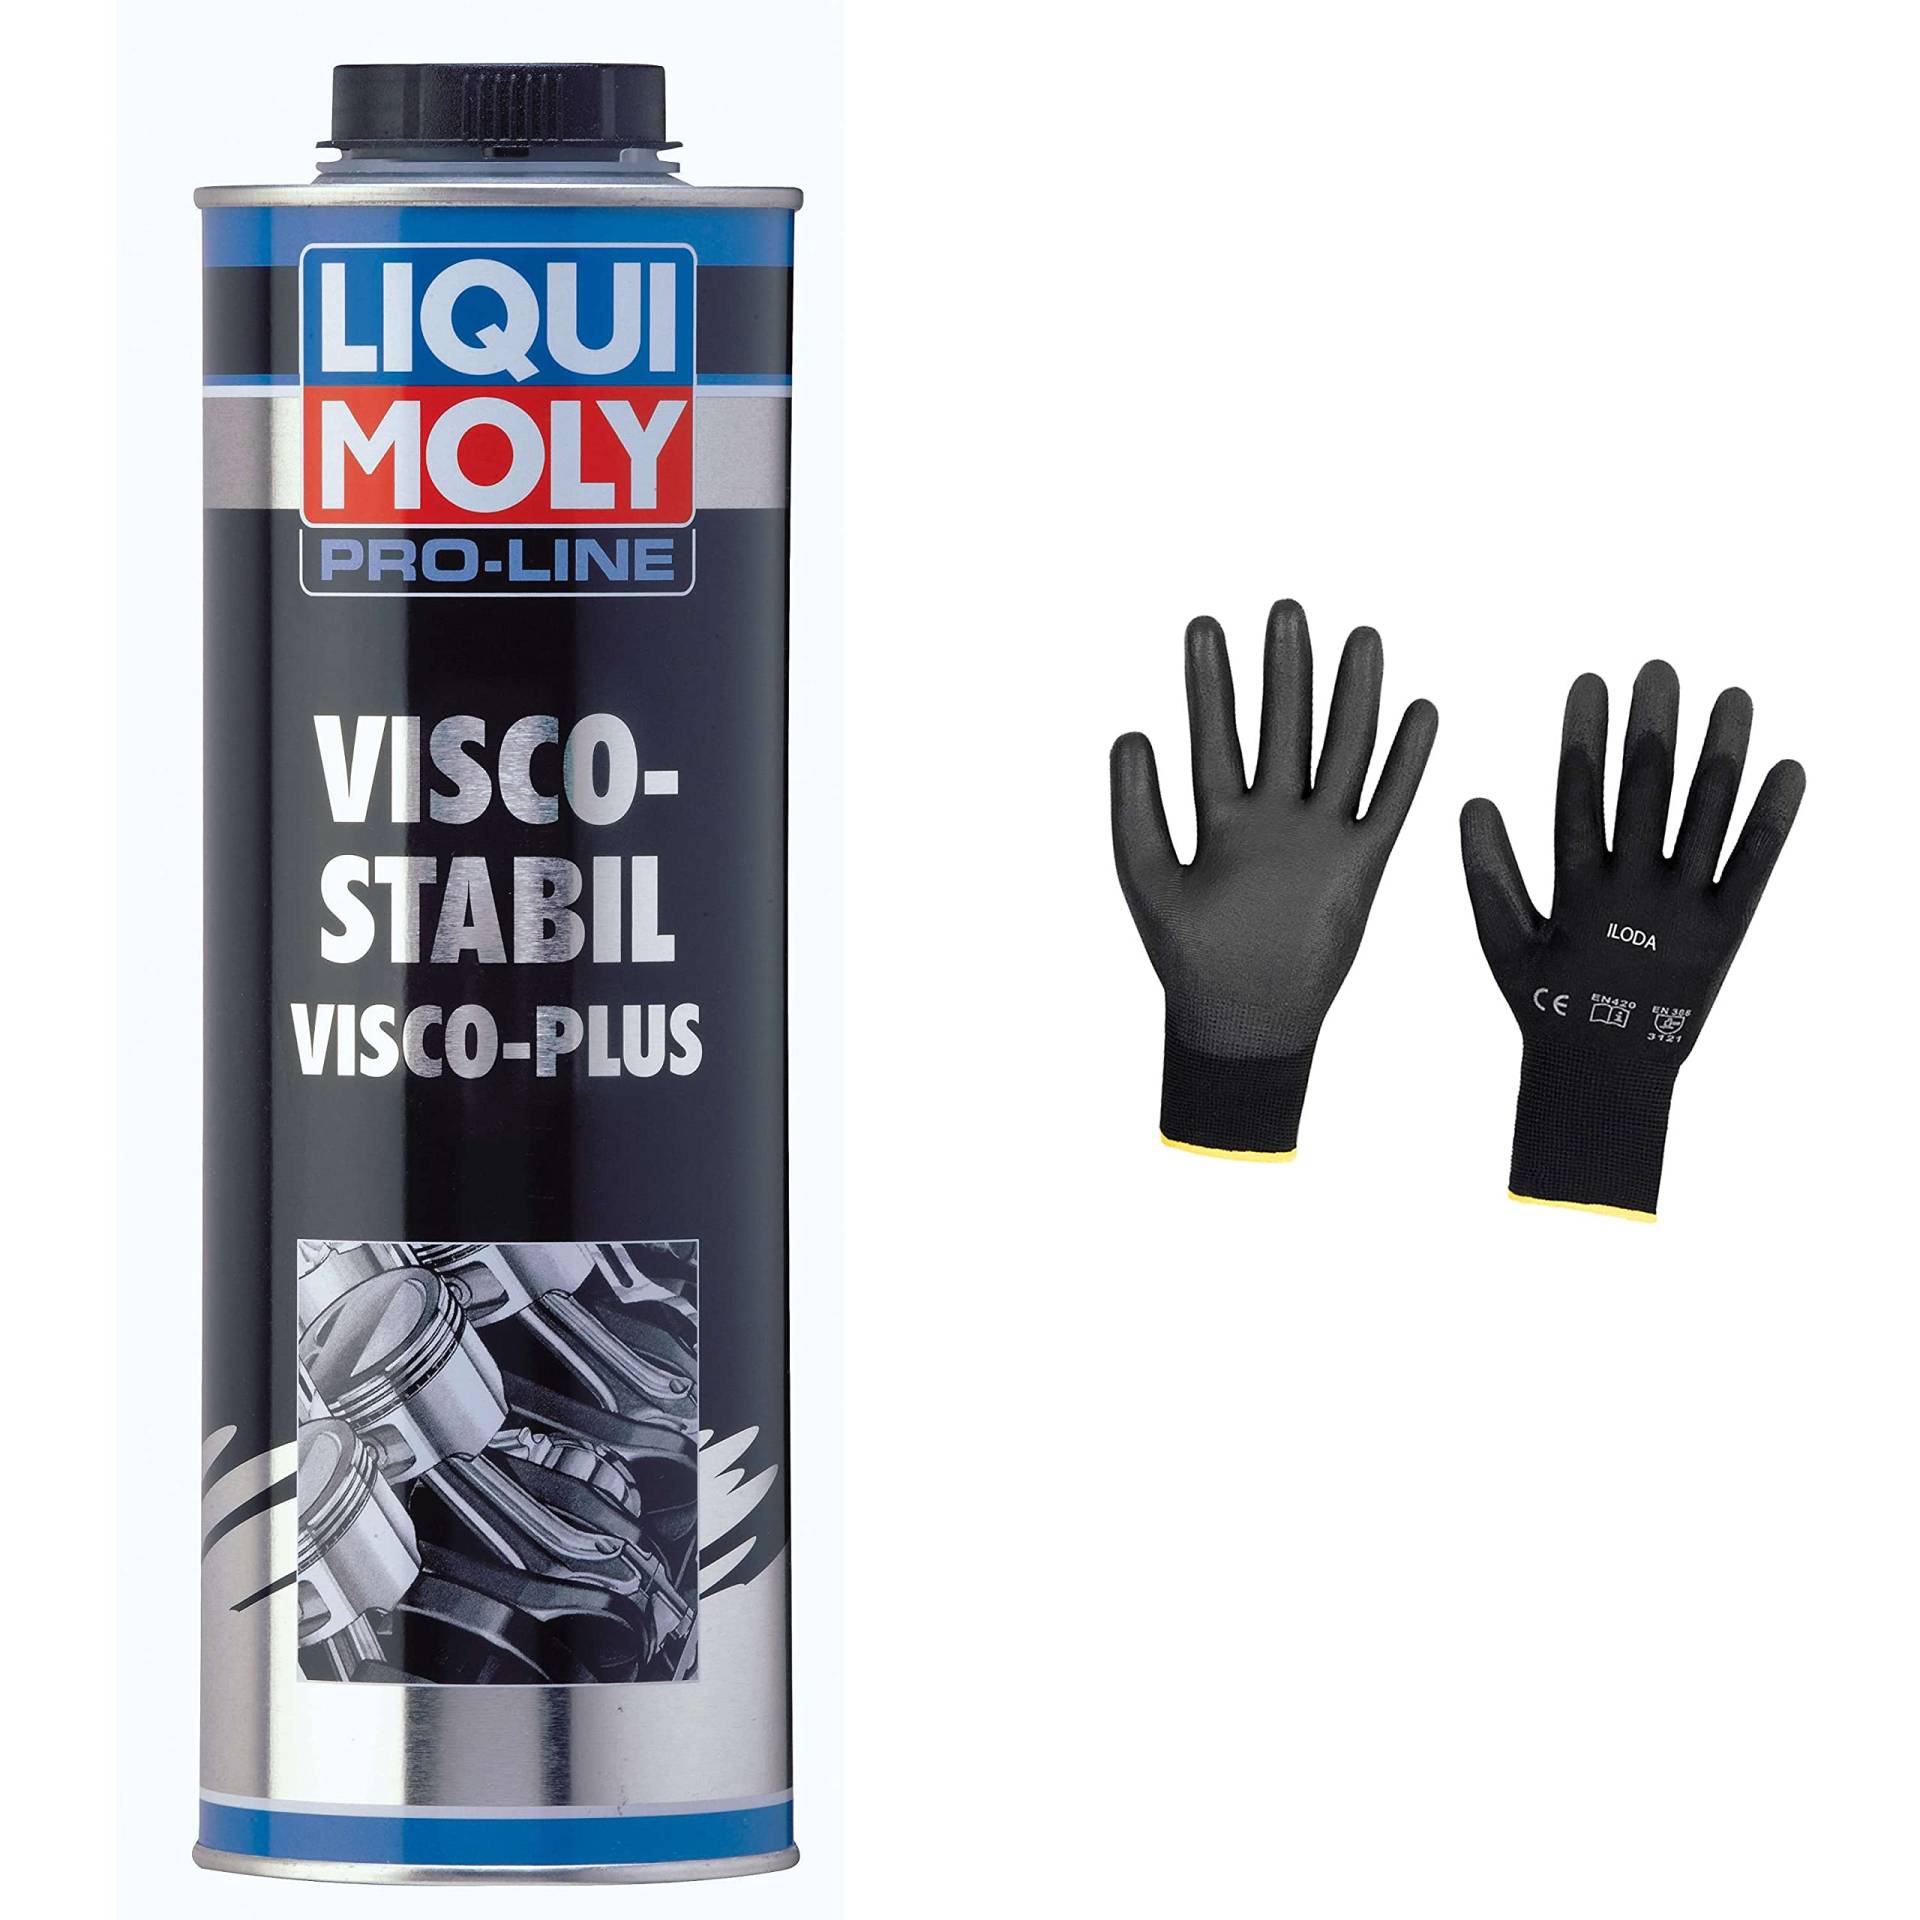 Iloda Original Liqui Moly 1l Pro-Line Visco-Stabil 5196 Schutzhandschuhe von Iloda